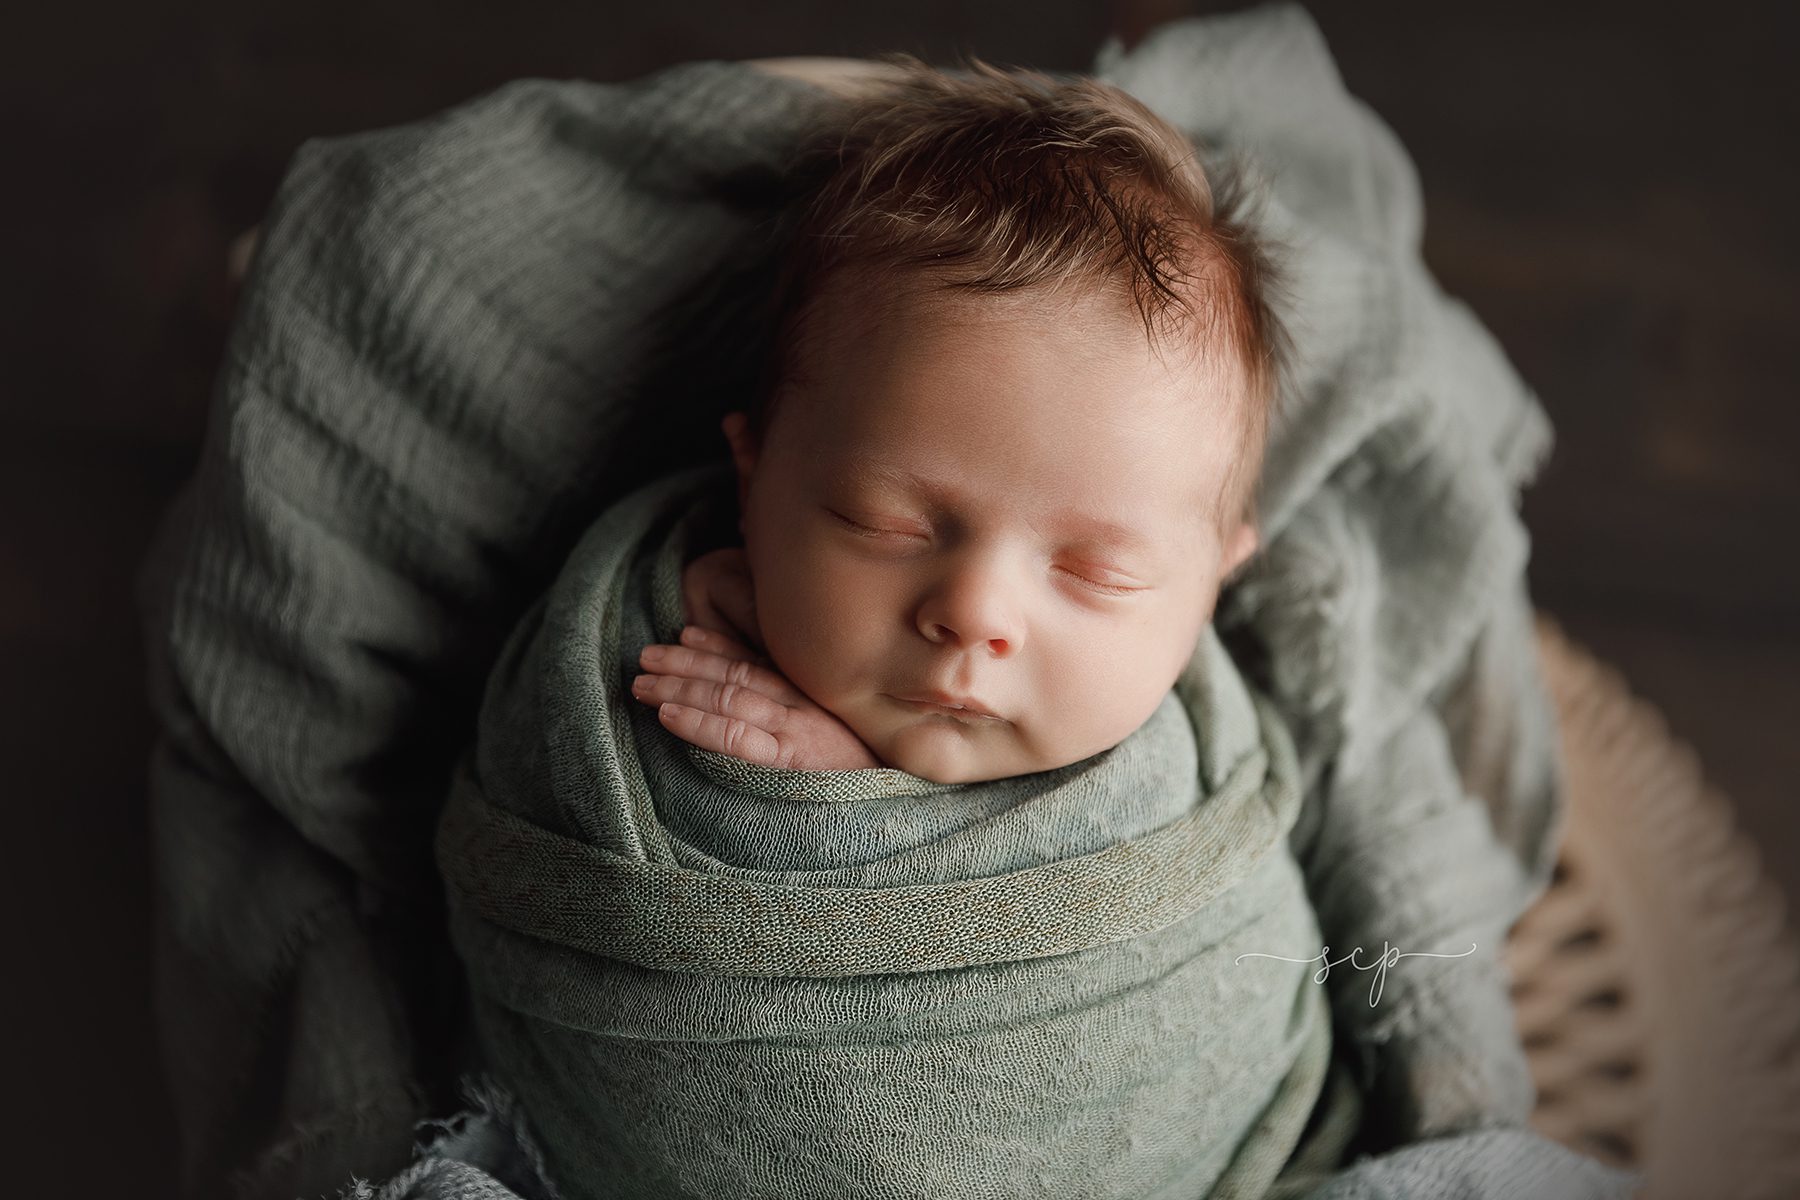 knoxville newborn photographer